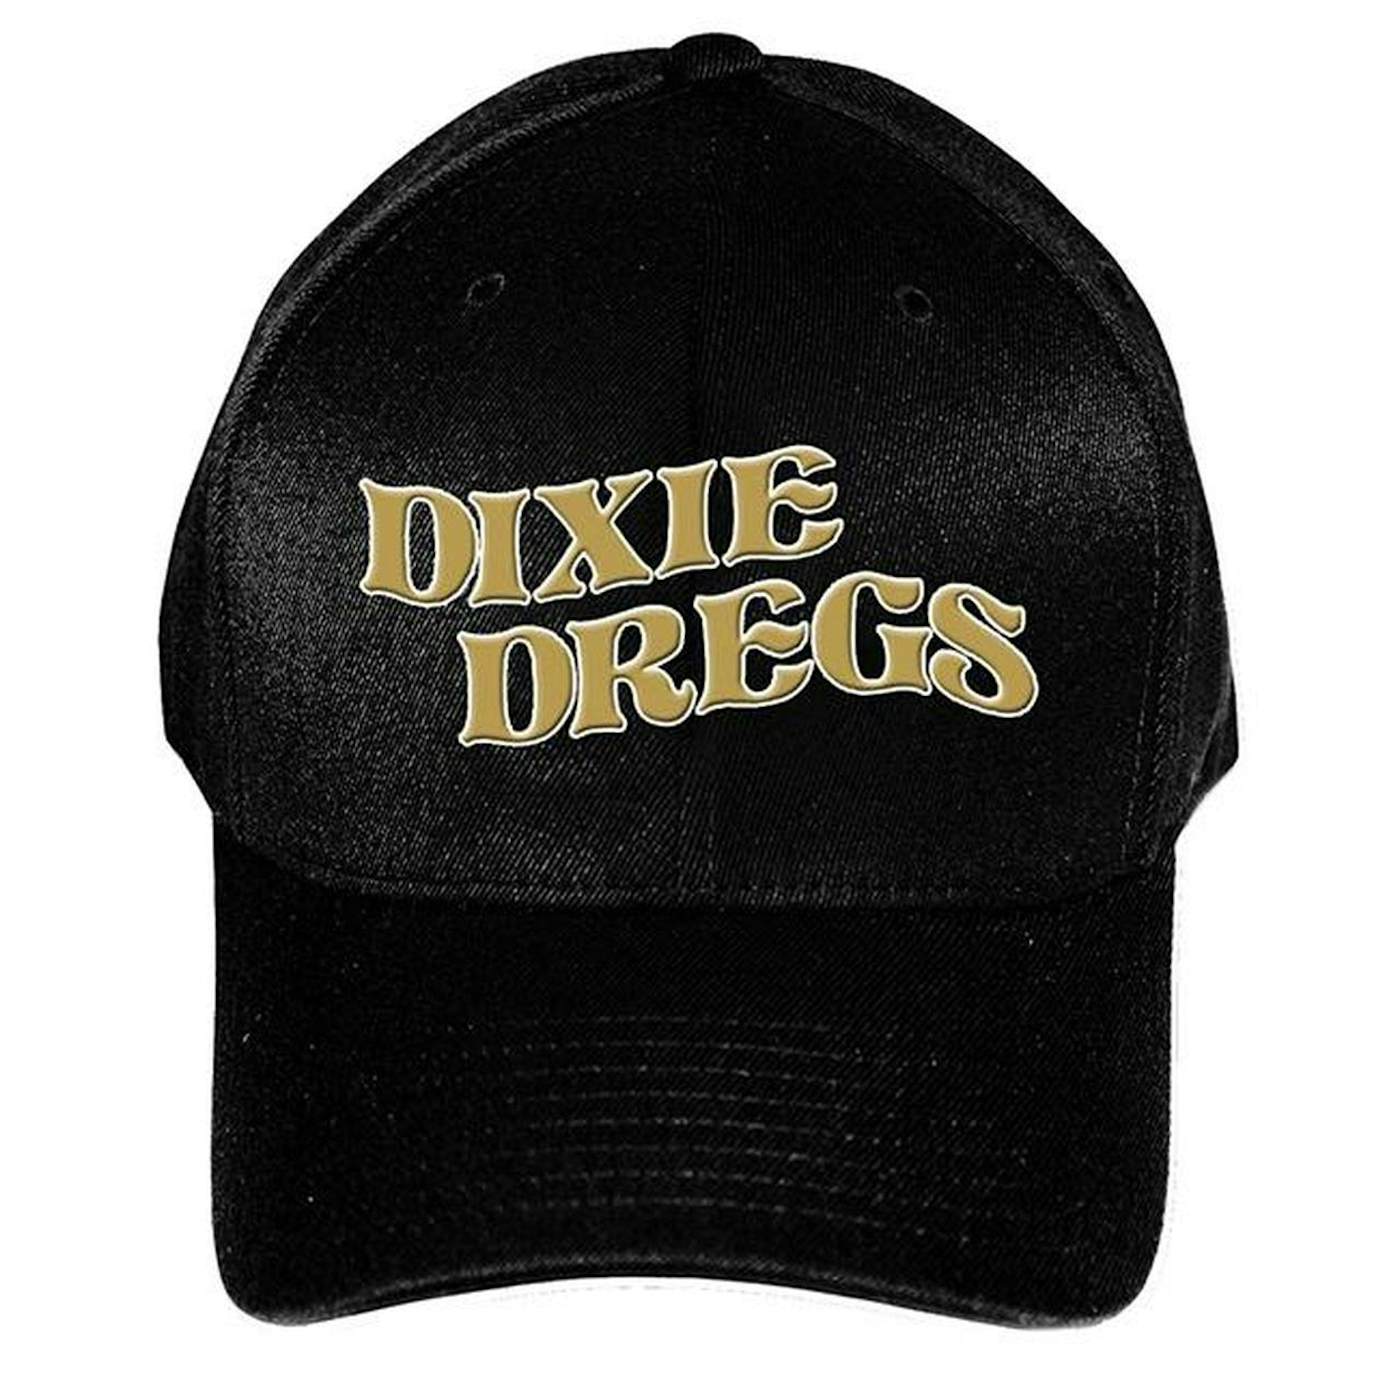 Dixie Dregs 2018 Tour Baseball Cap